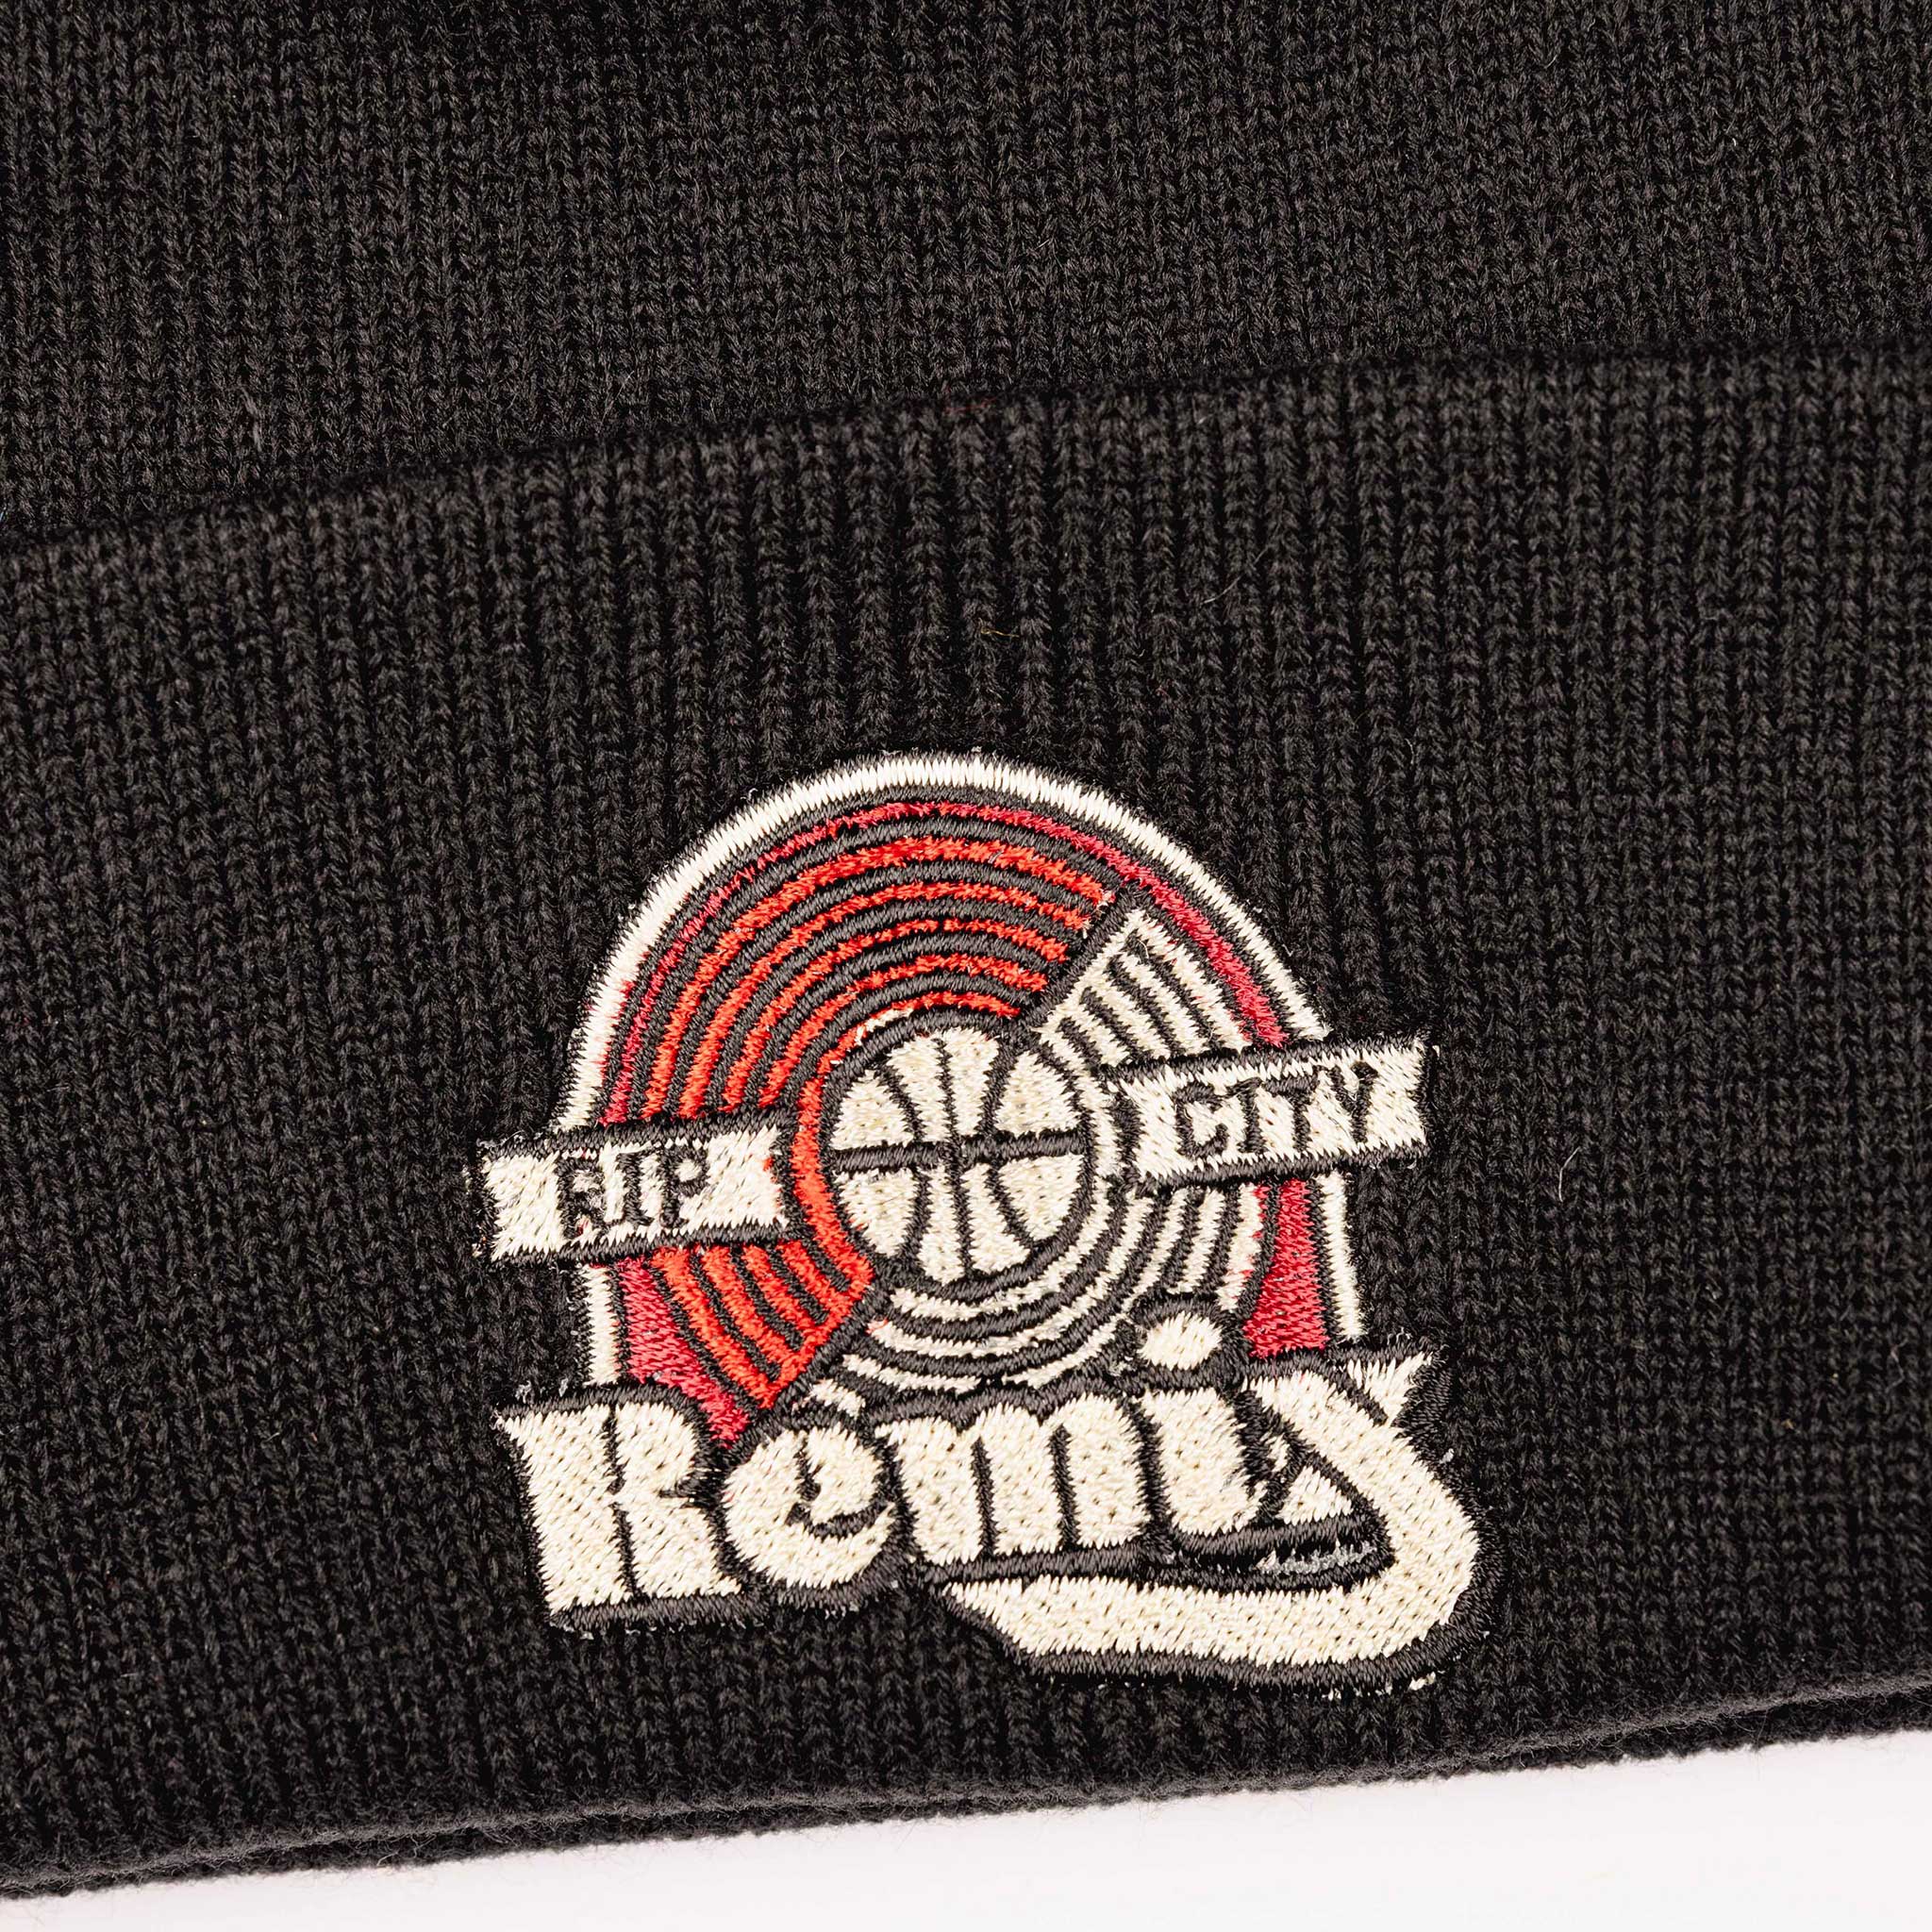 Rip City Remix Knit Beanie